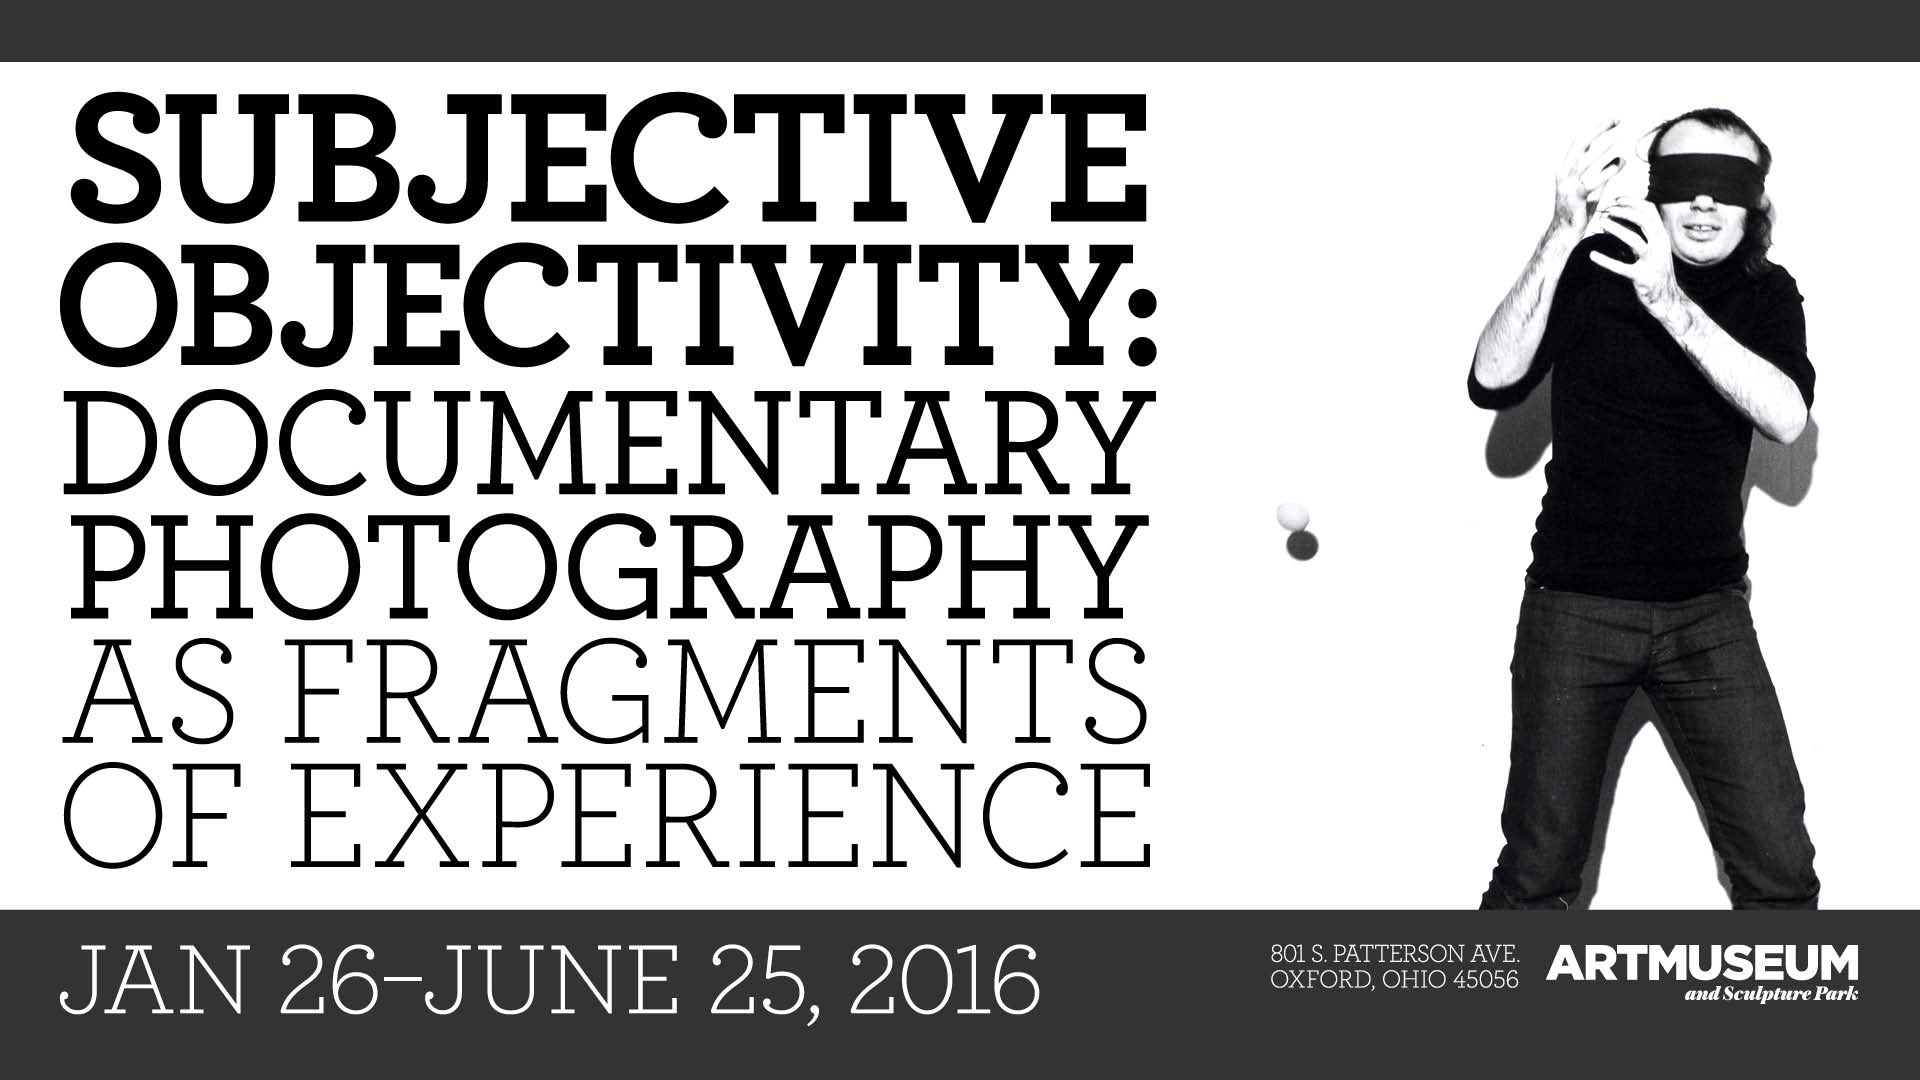 Subjective Objectivity: Documentary Photography as Fragments of Experience January 26-June 25, 2016